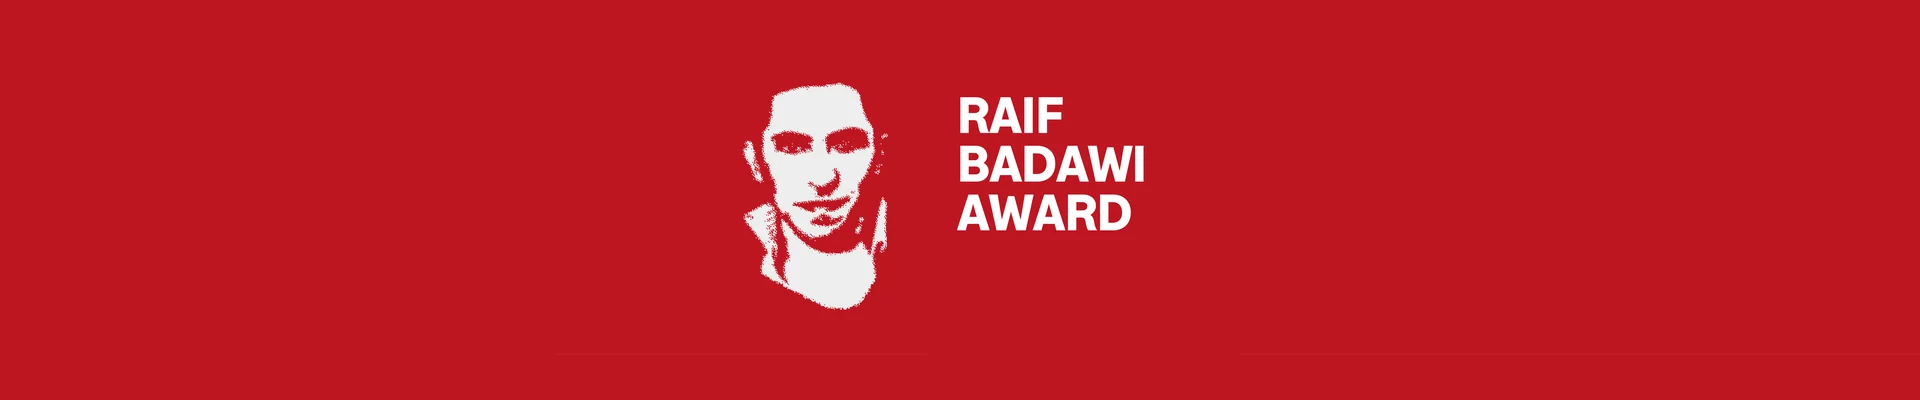 Raif Badawi Award 